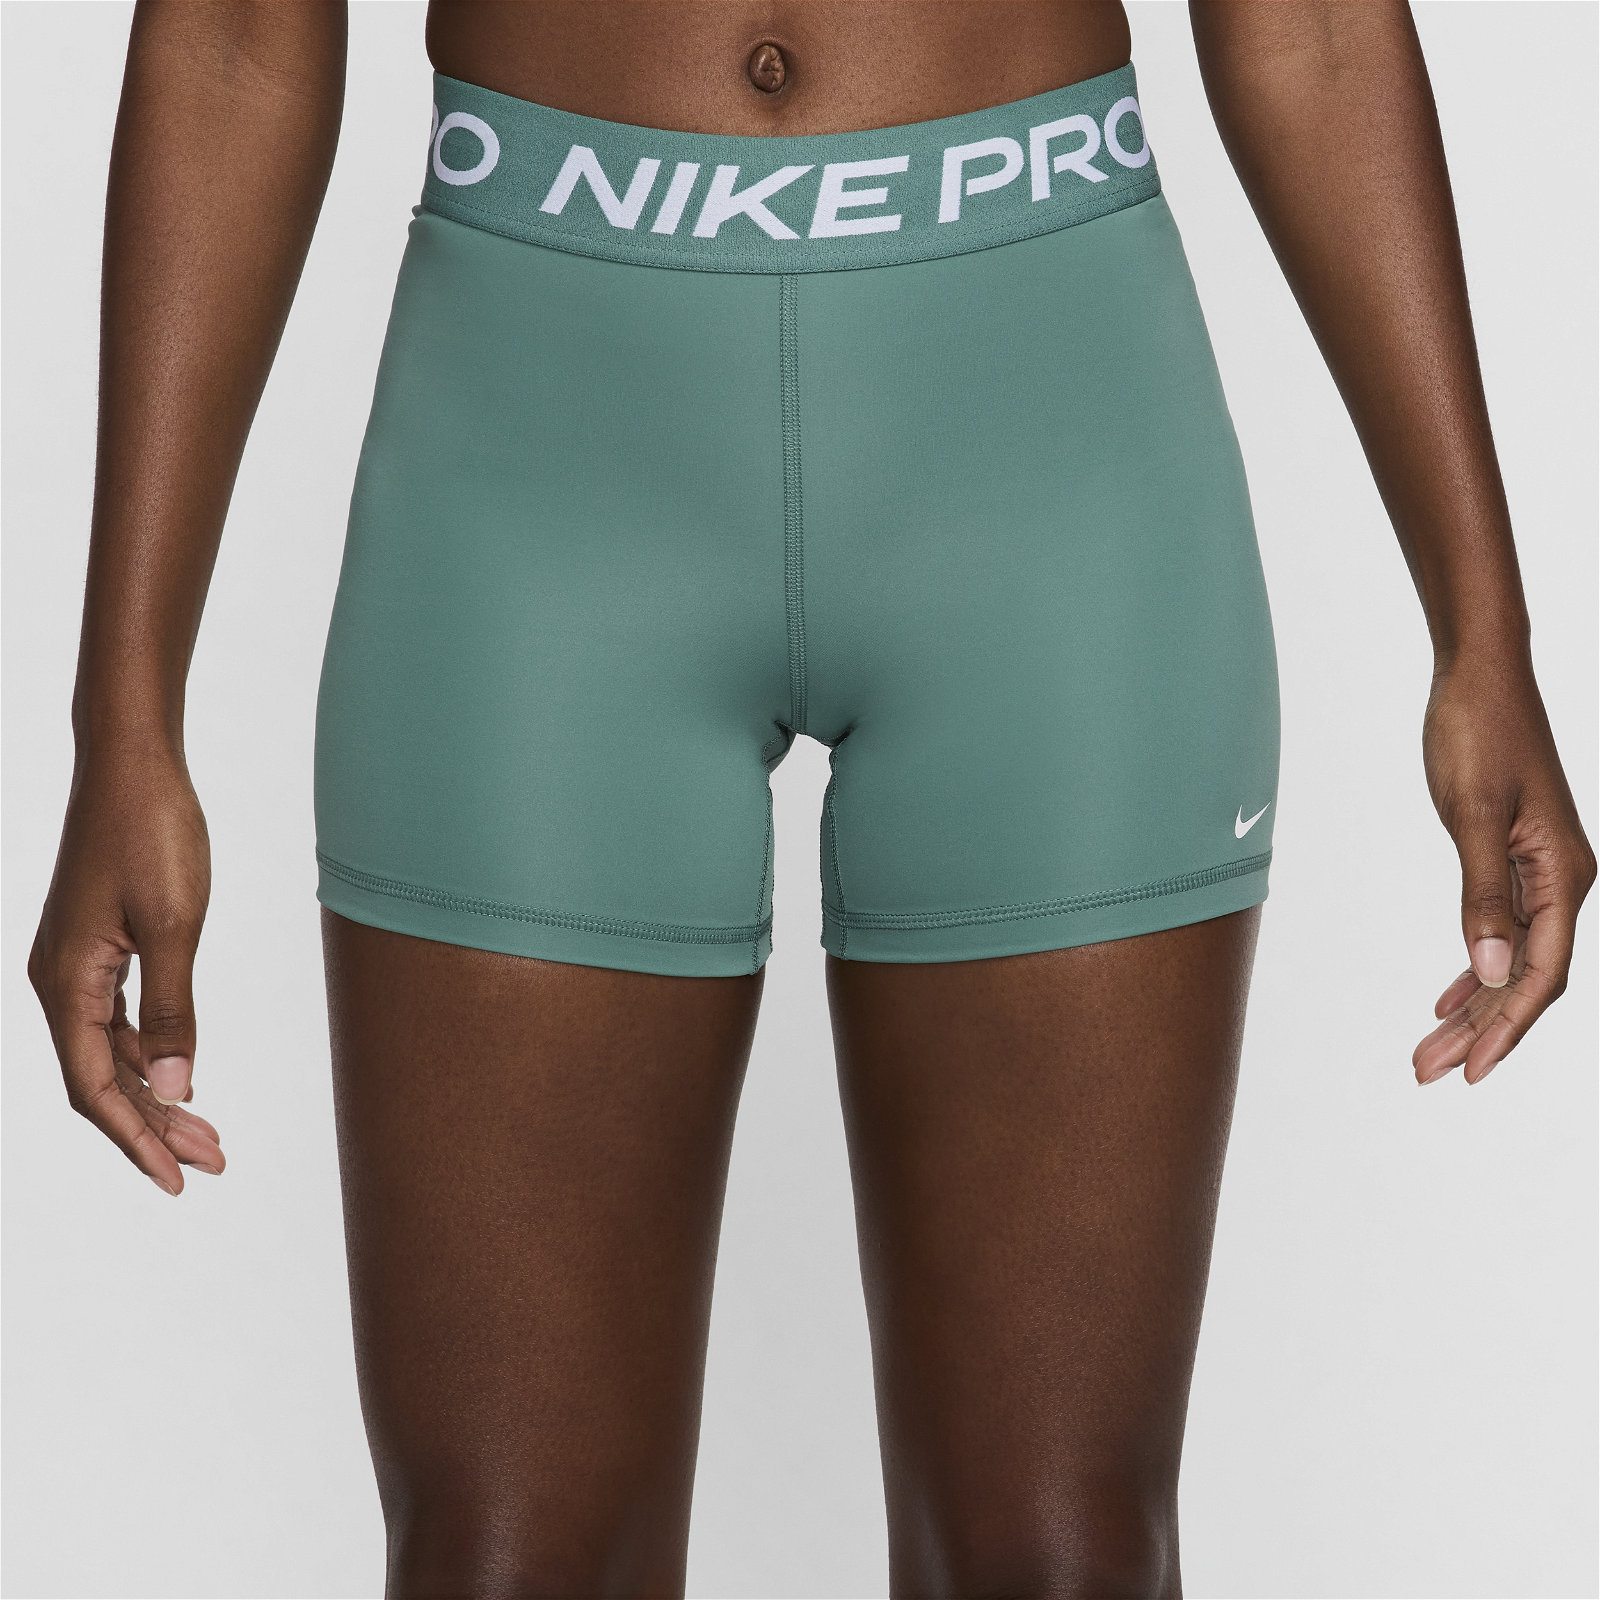 13 cm Pro 365 Shorts